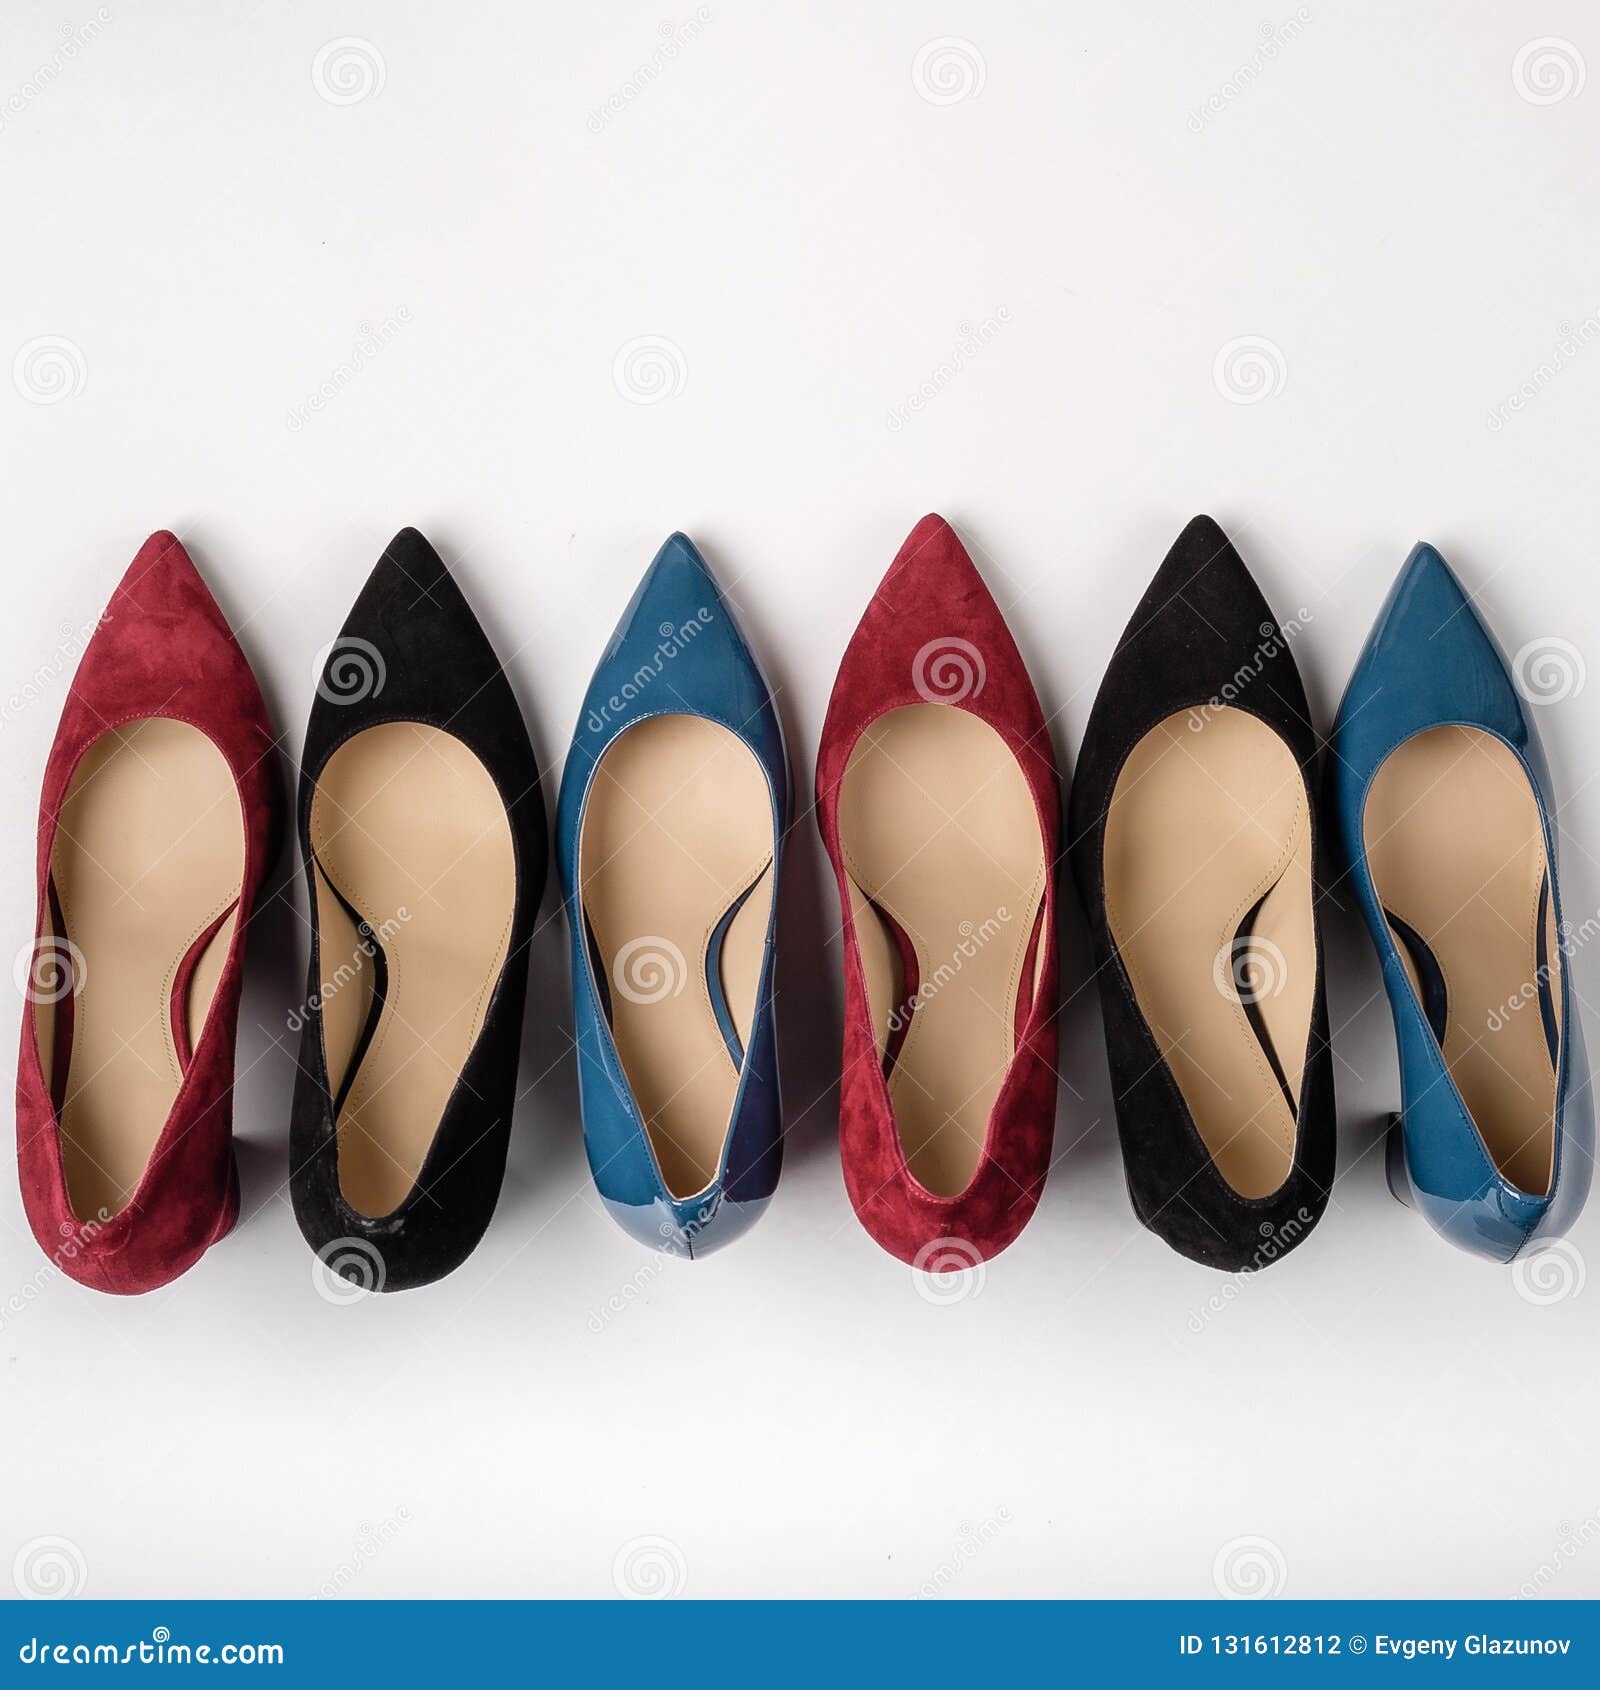 Footwear for Women. High Heels. Top View Different Colors of High Heels ...